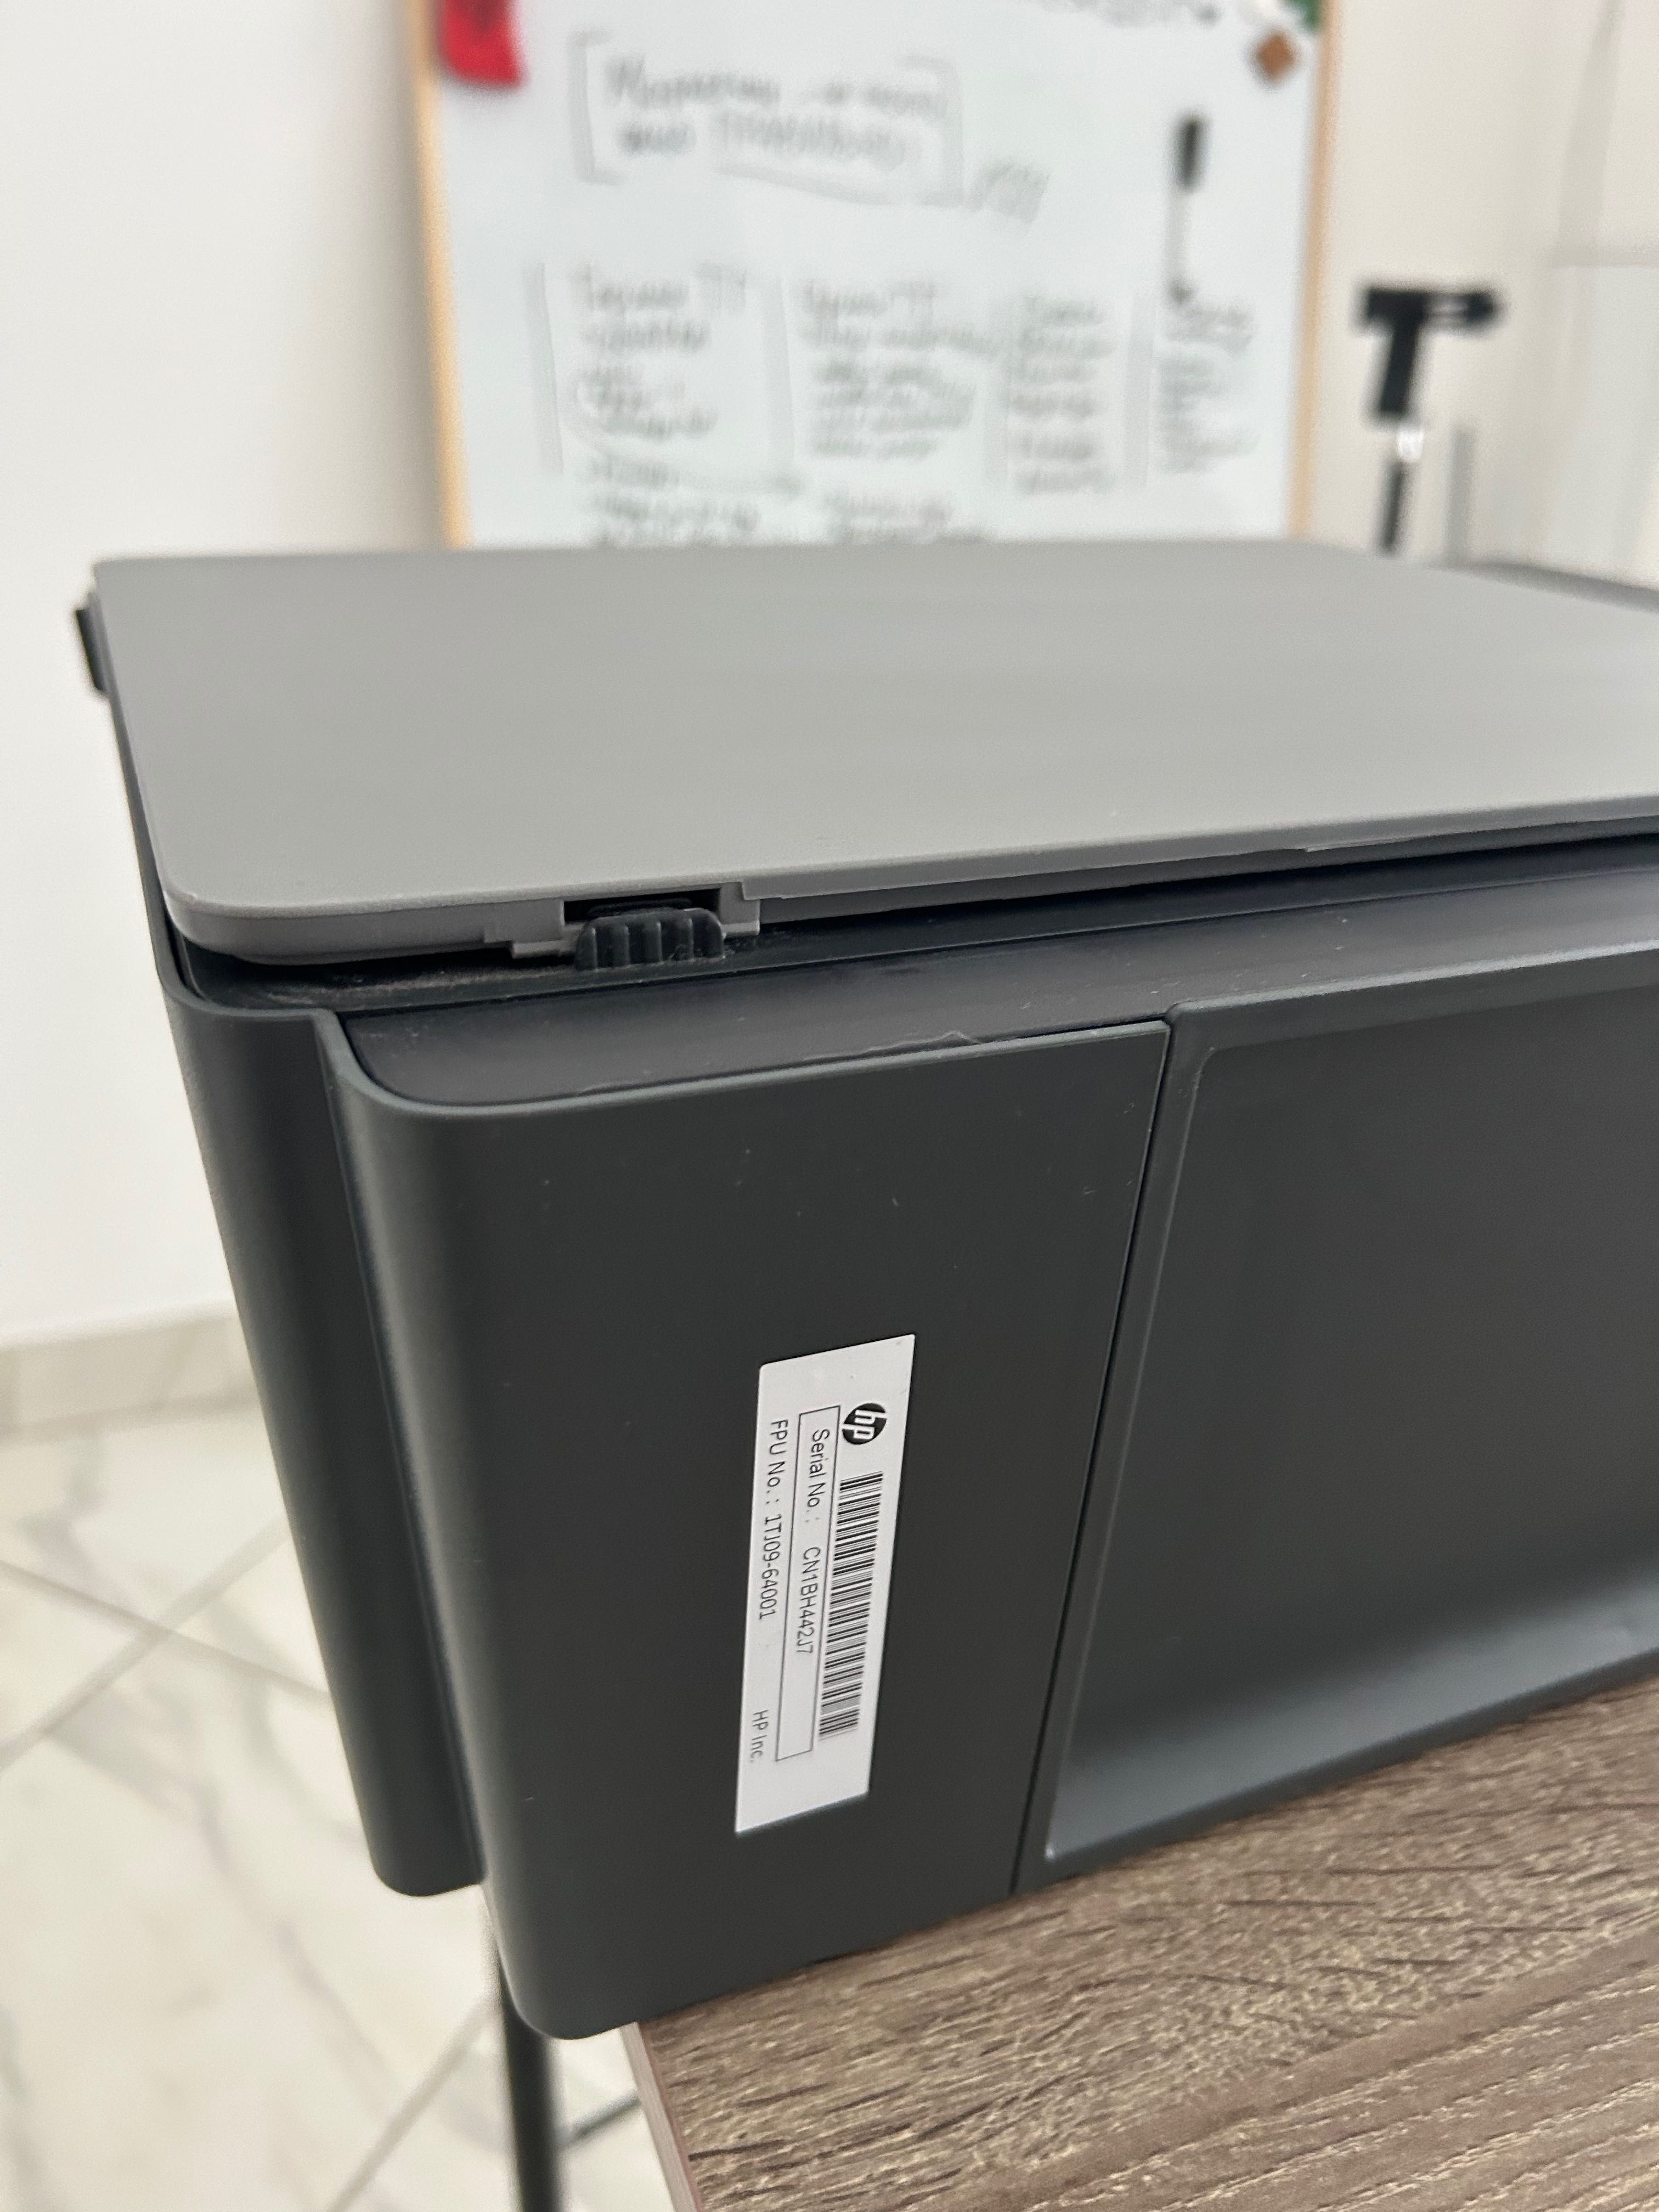 Принтер сканер ксерокс HP SmartTank 515 кольоровий друк